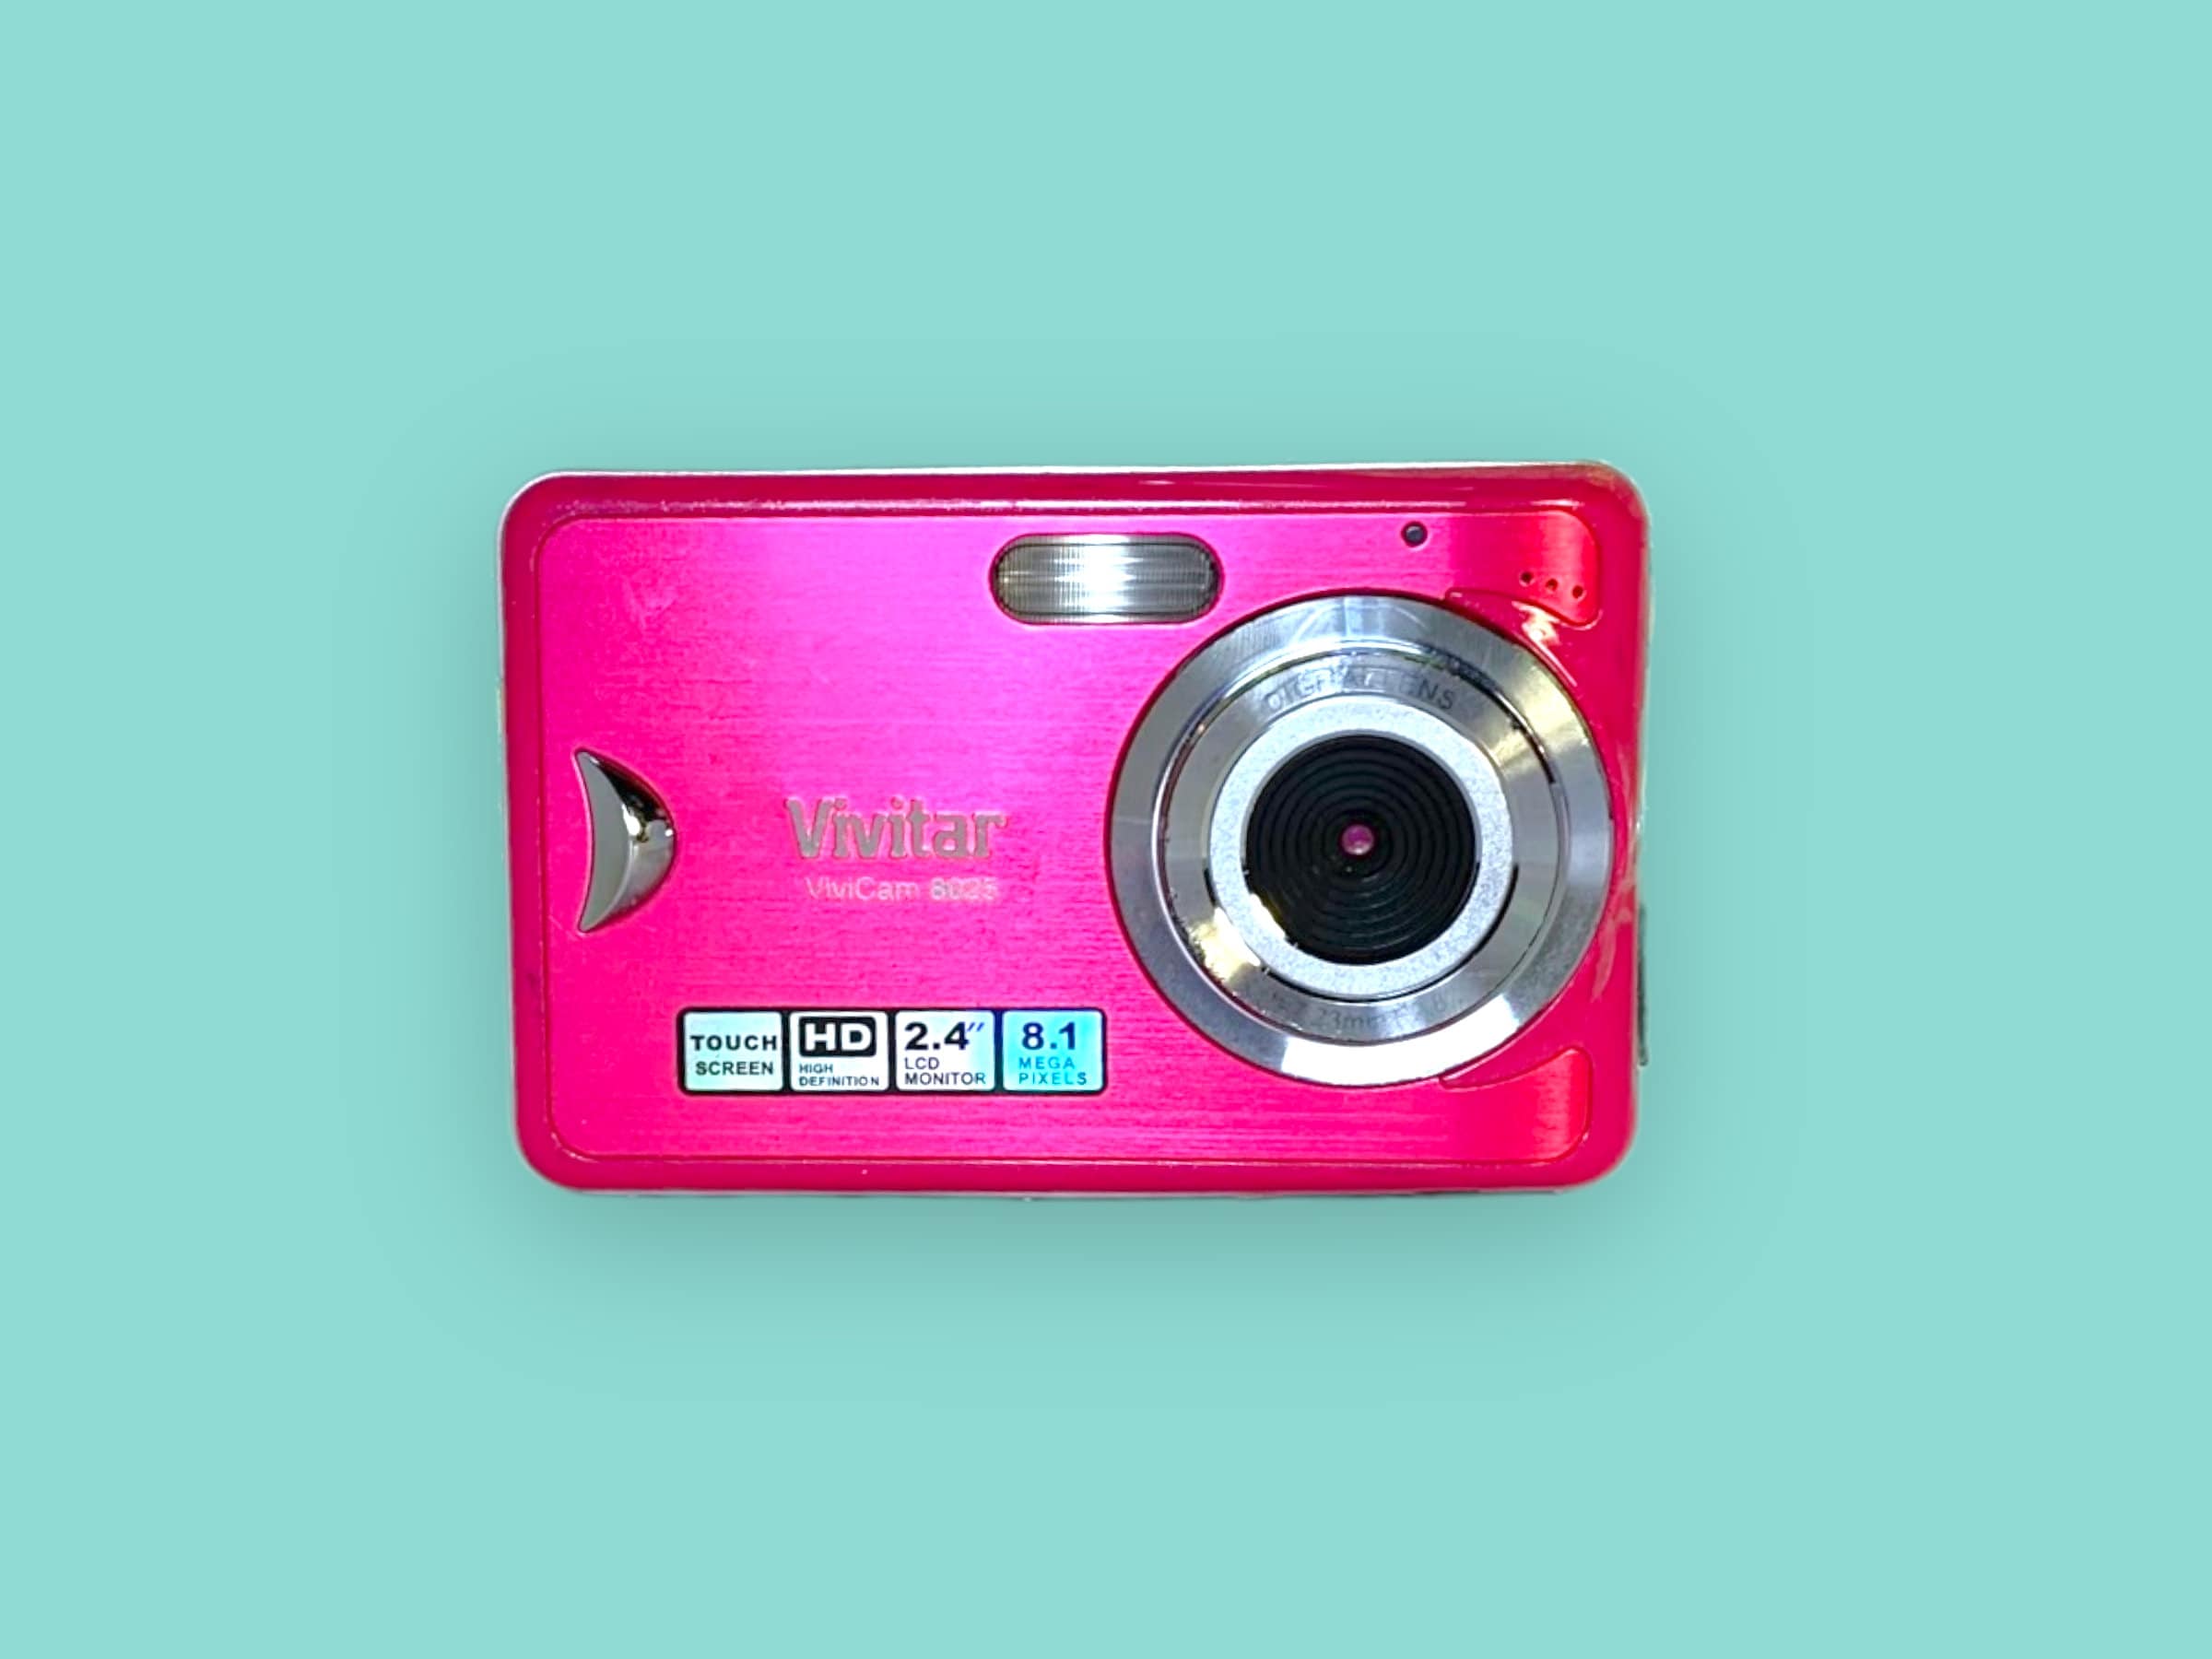 Digital Vintage 2000s - RANDOM BOX – Camera Shop